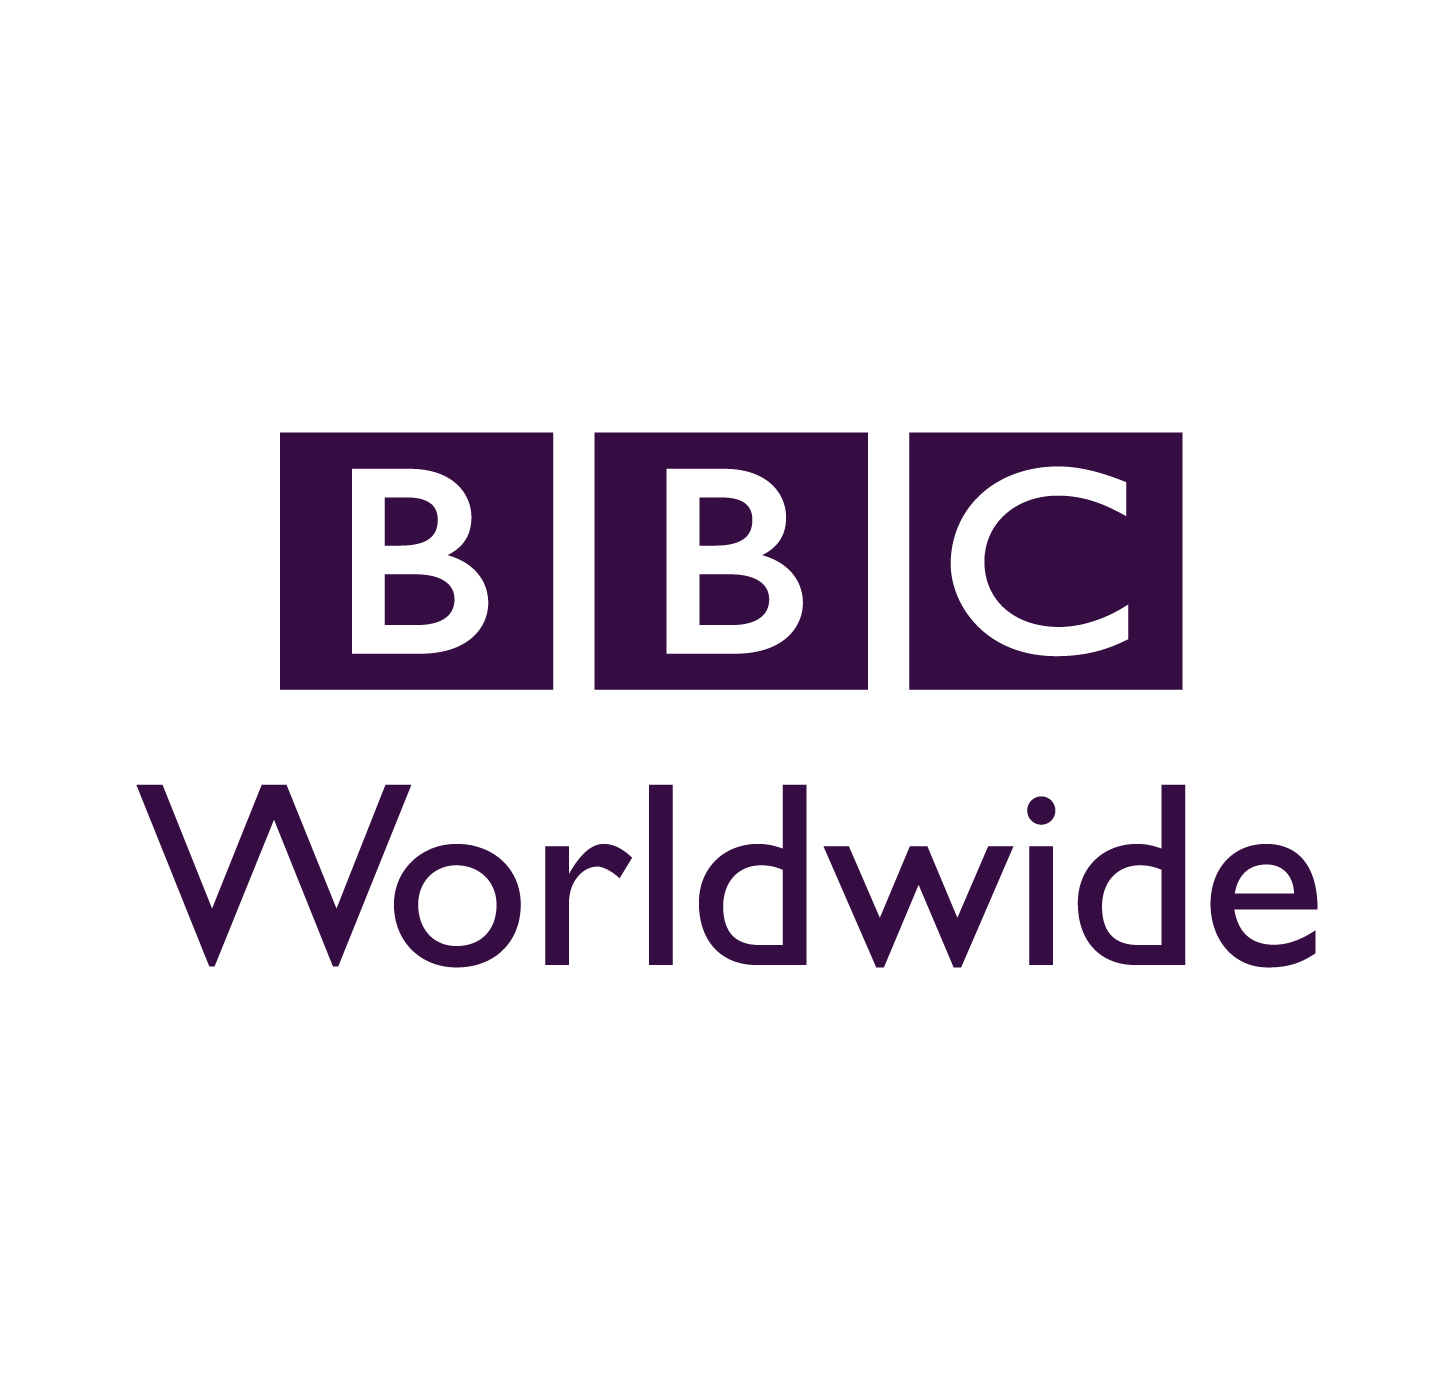 kisspng-bbc-worldwide-united-kingdom-subsidiary-broadcasti-5b04a2252c6947.4419069715270303091819.png